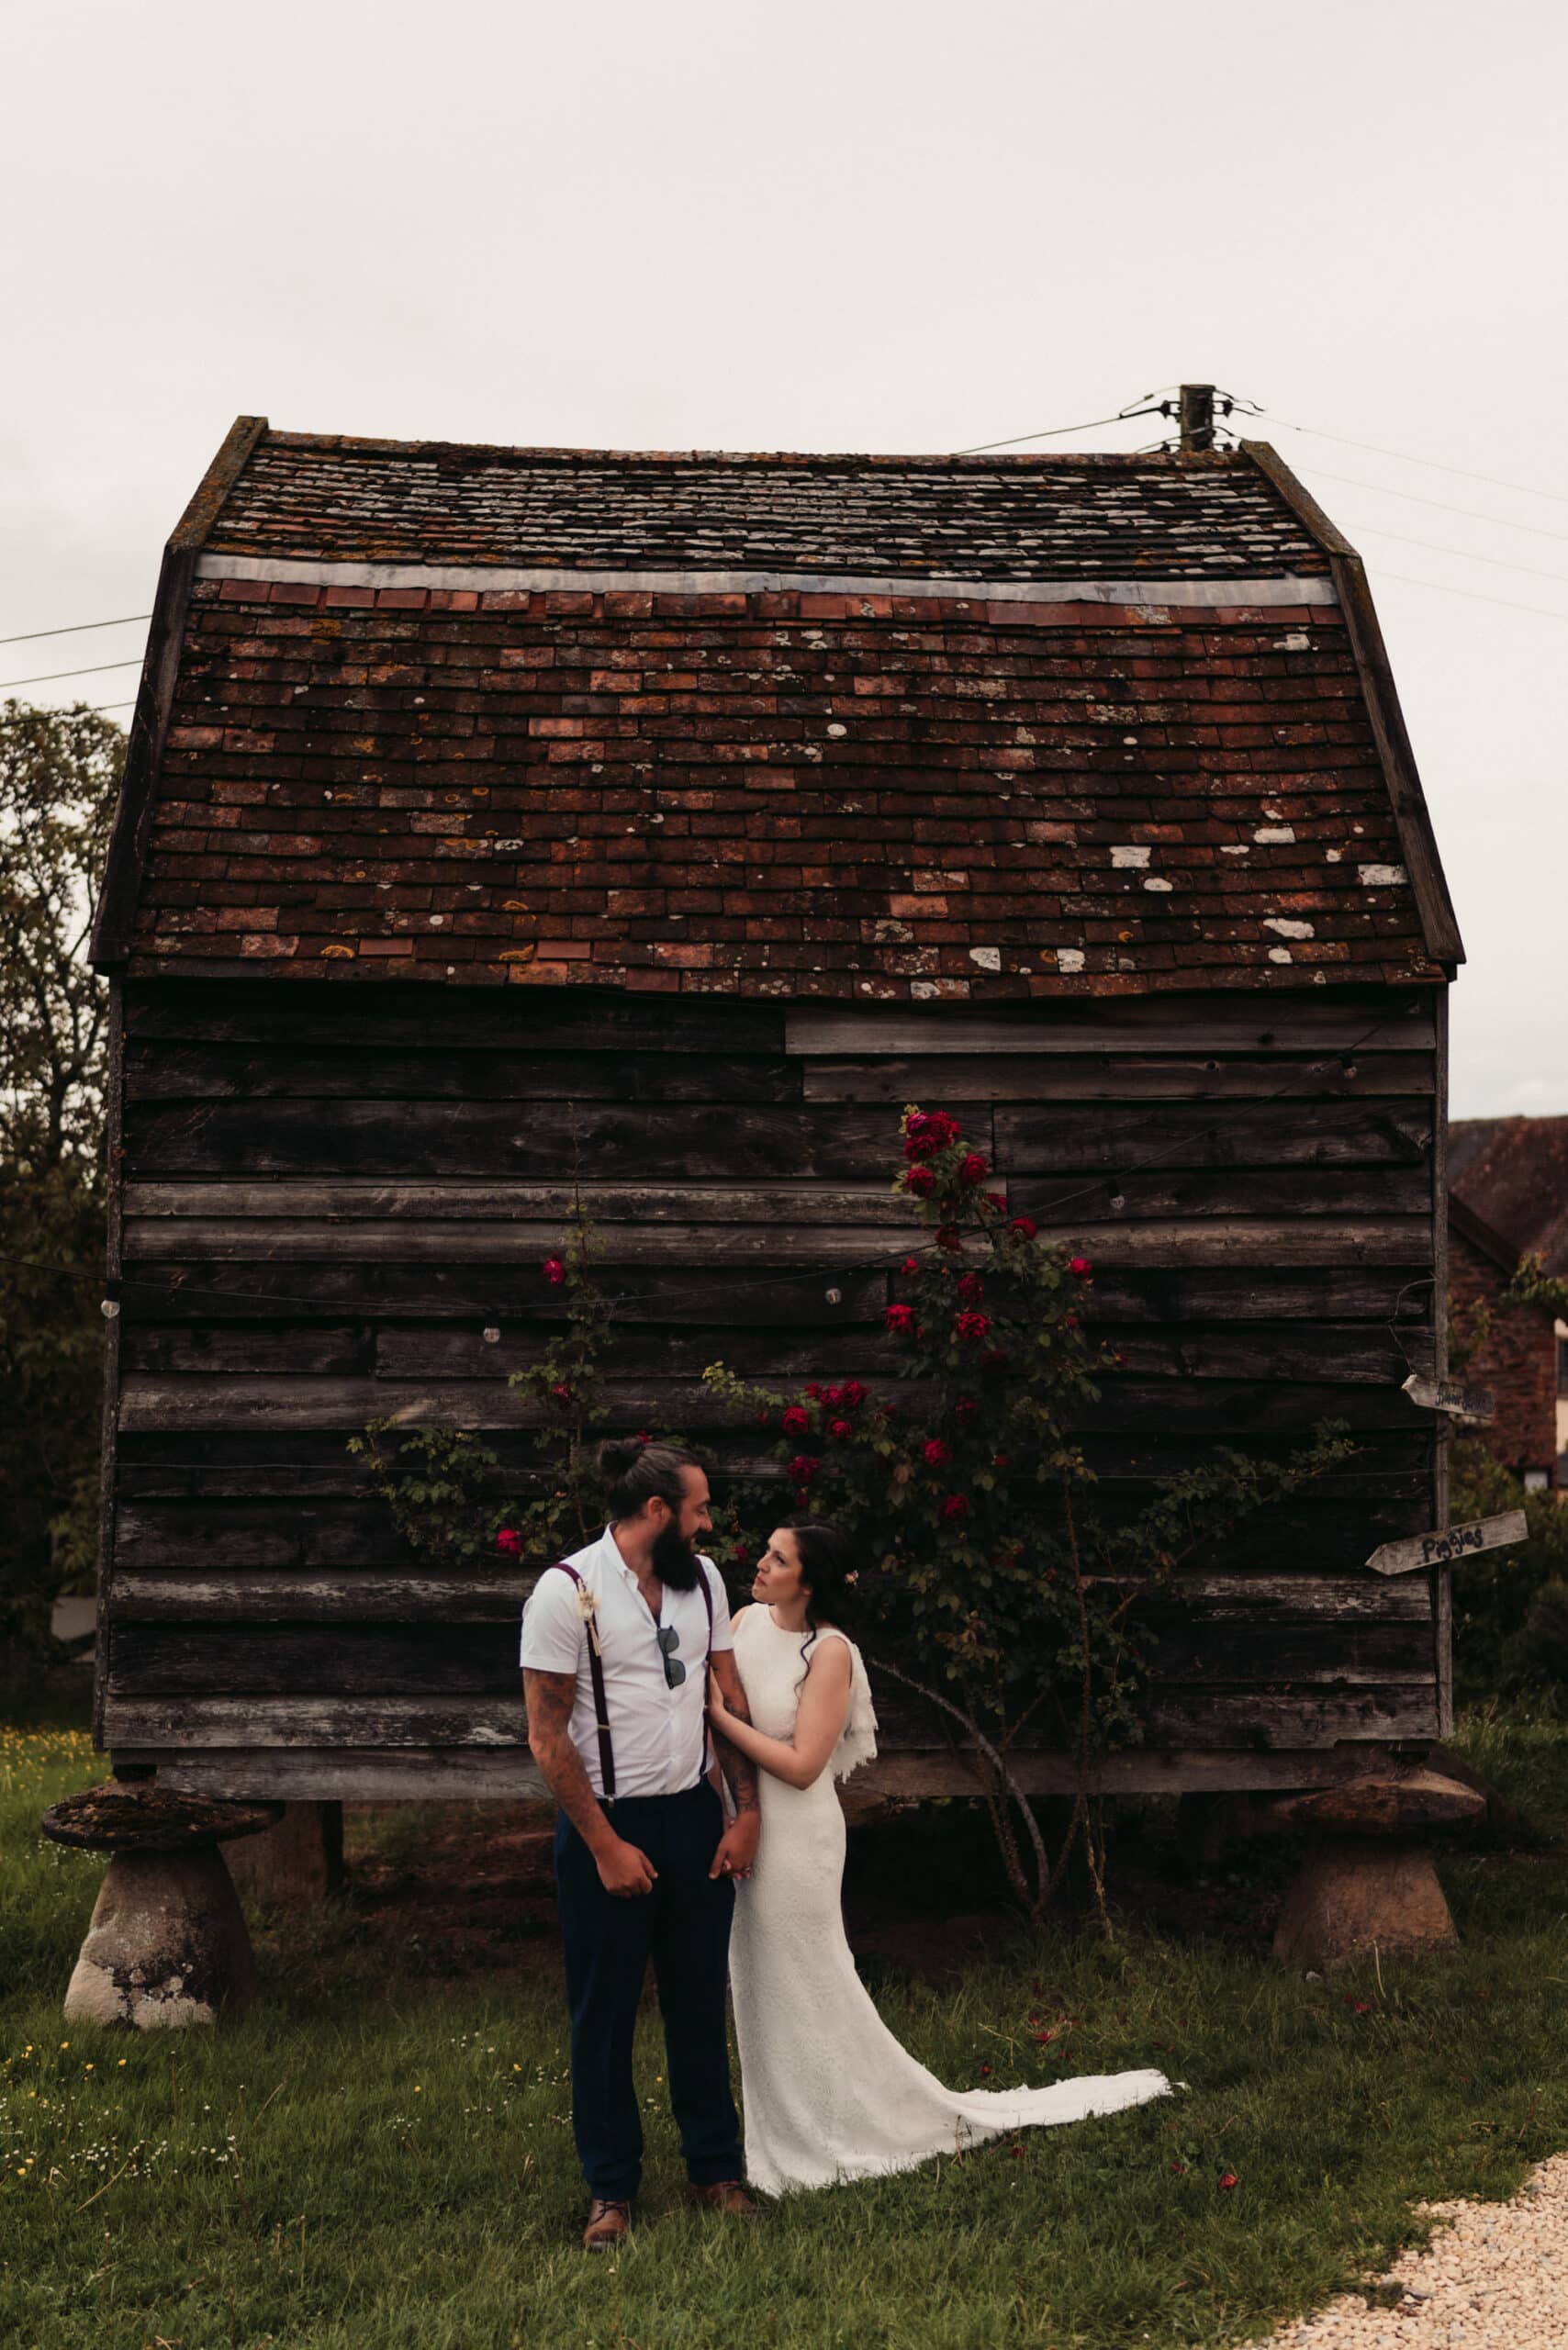 Wedding Photography at Huntstile Organic Farm, Somerset Wildly in Love